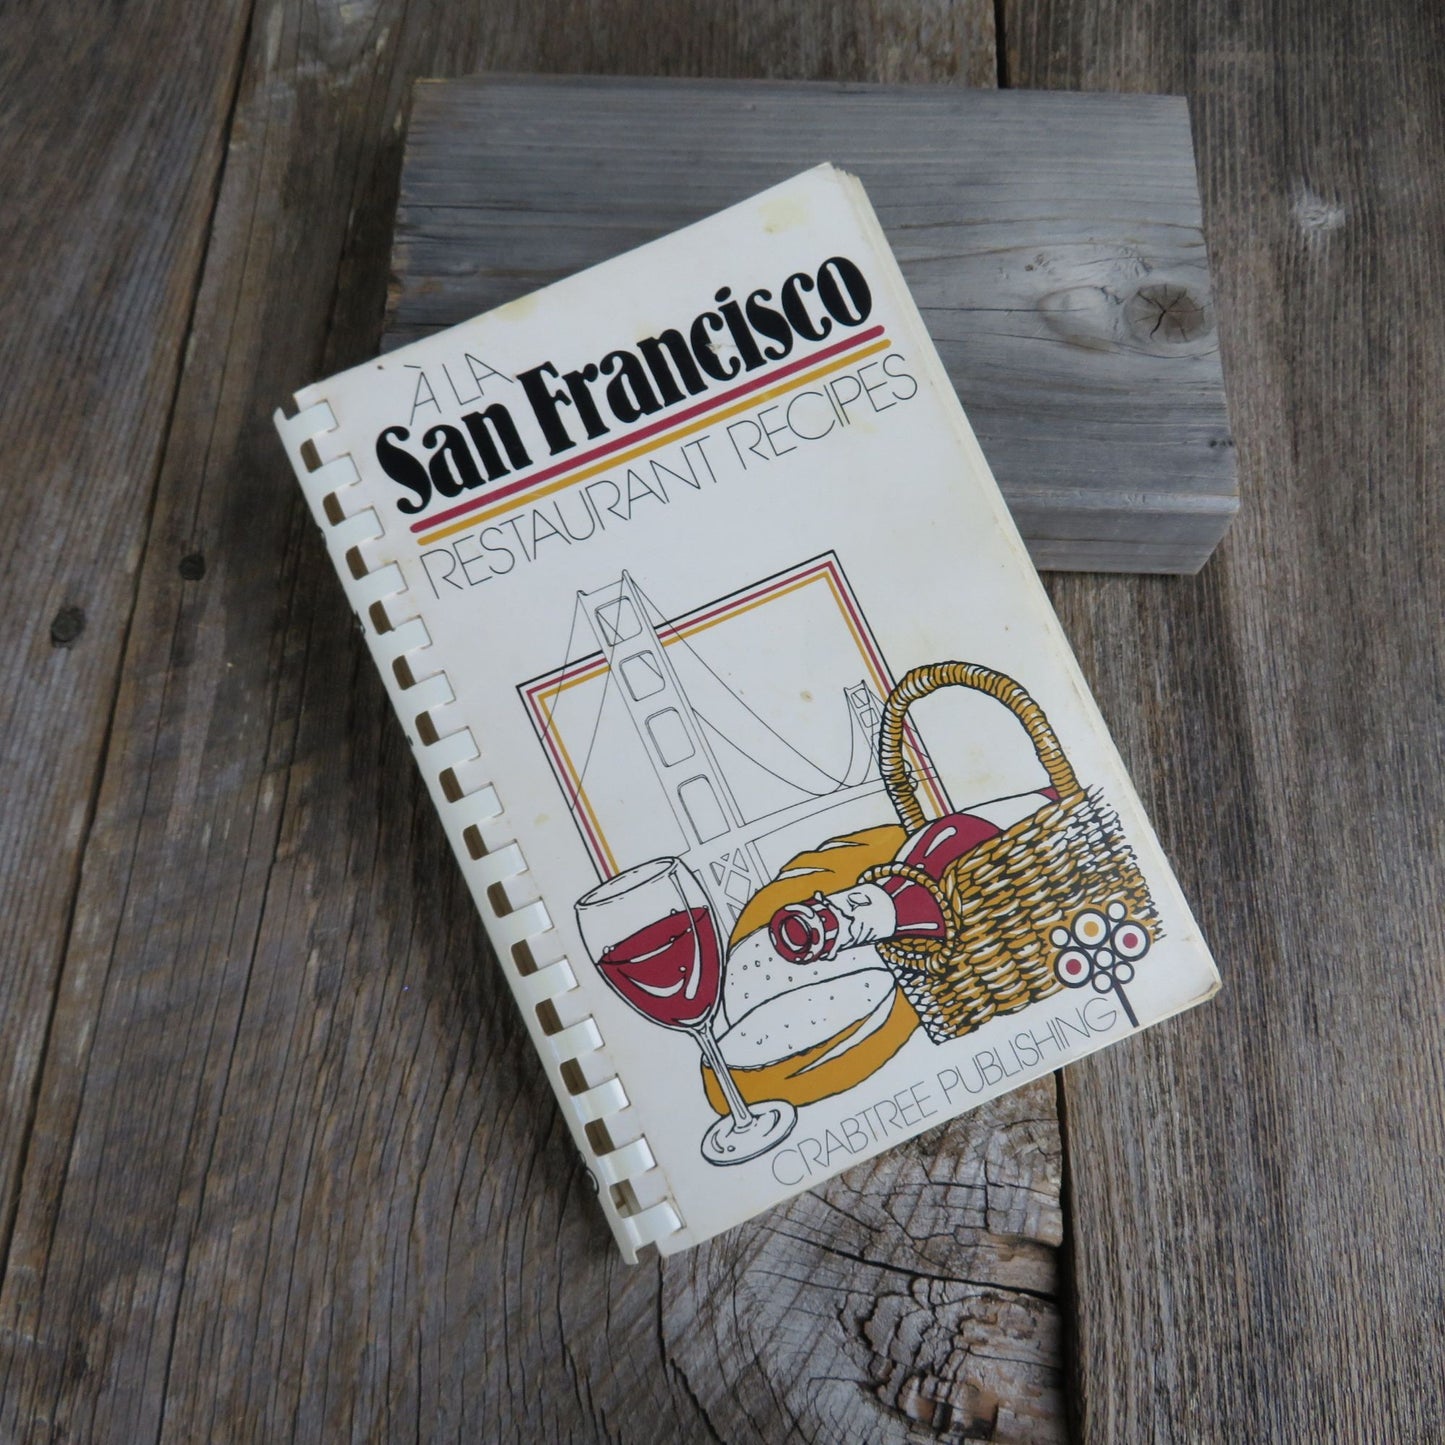 A La San Francisco Restaurant Recipes Cookbook Crabtree 1979 Vintage Monroe's Paprikas Fono Ristoranti Orsi Scott's Seafood Grill